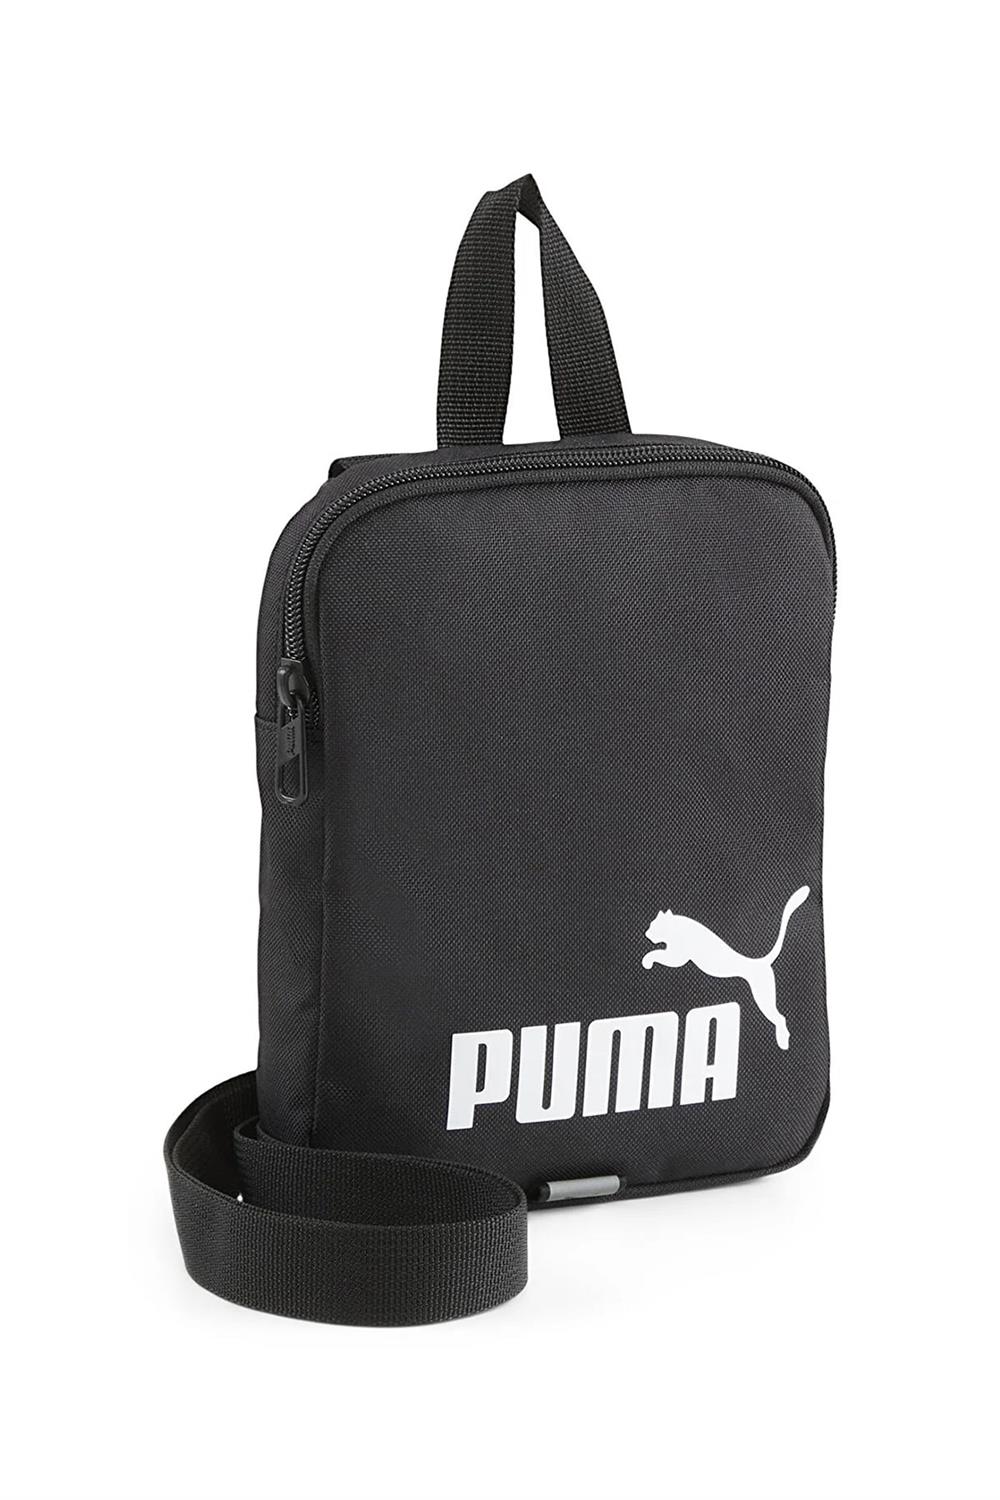 Puma Phase Portable Omuz Spor Çanta 07995501 | Sporborsasi.com